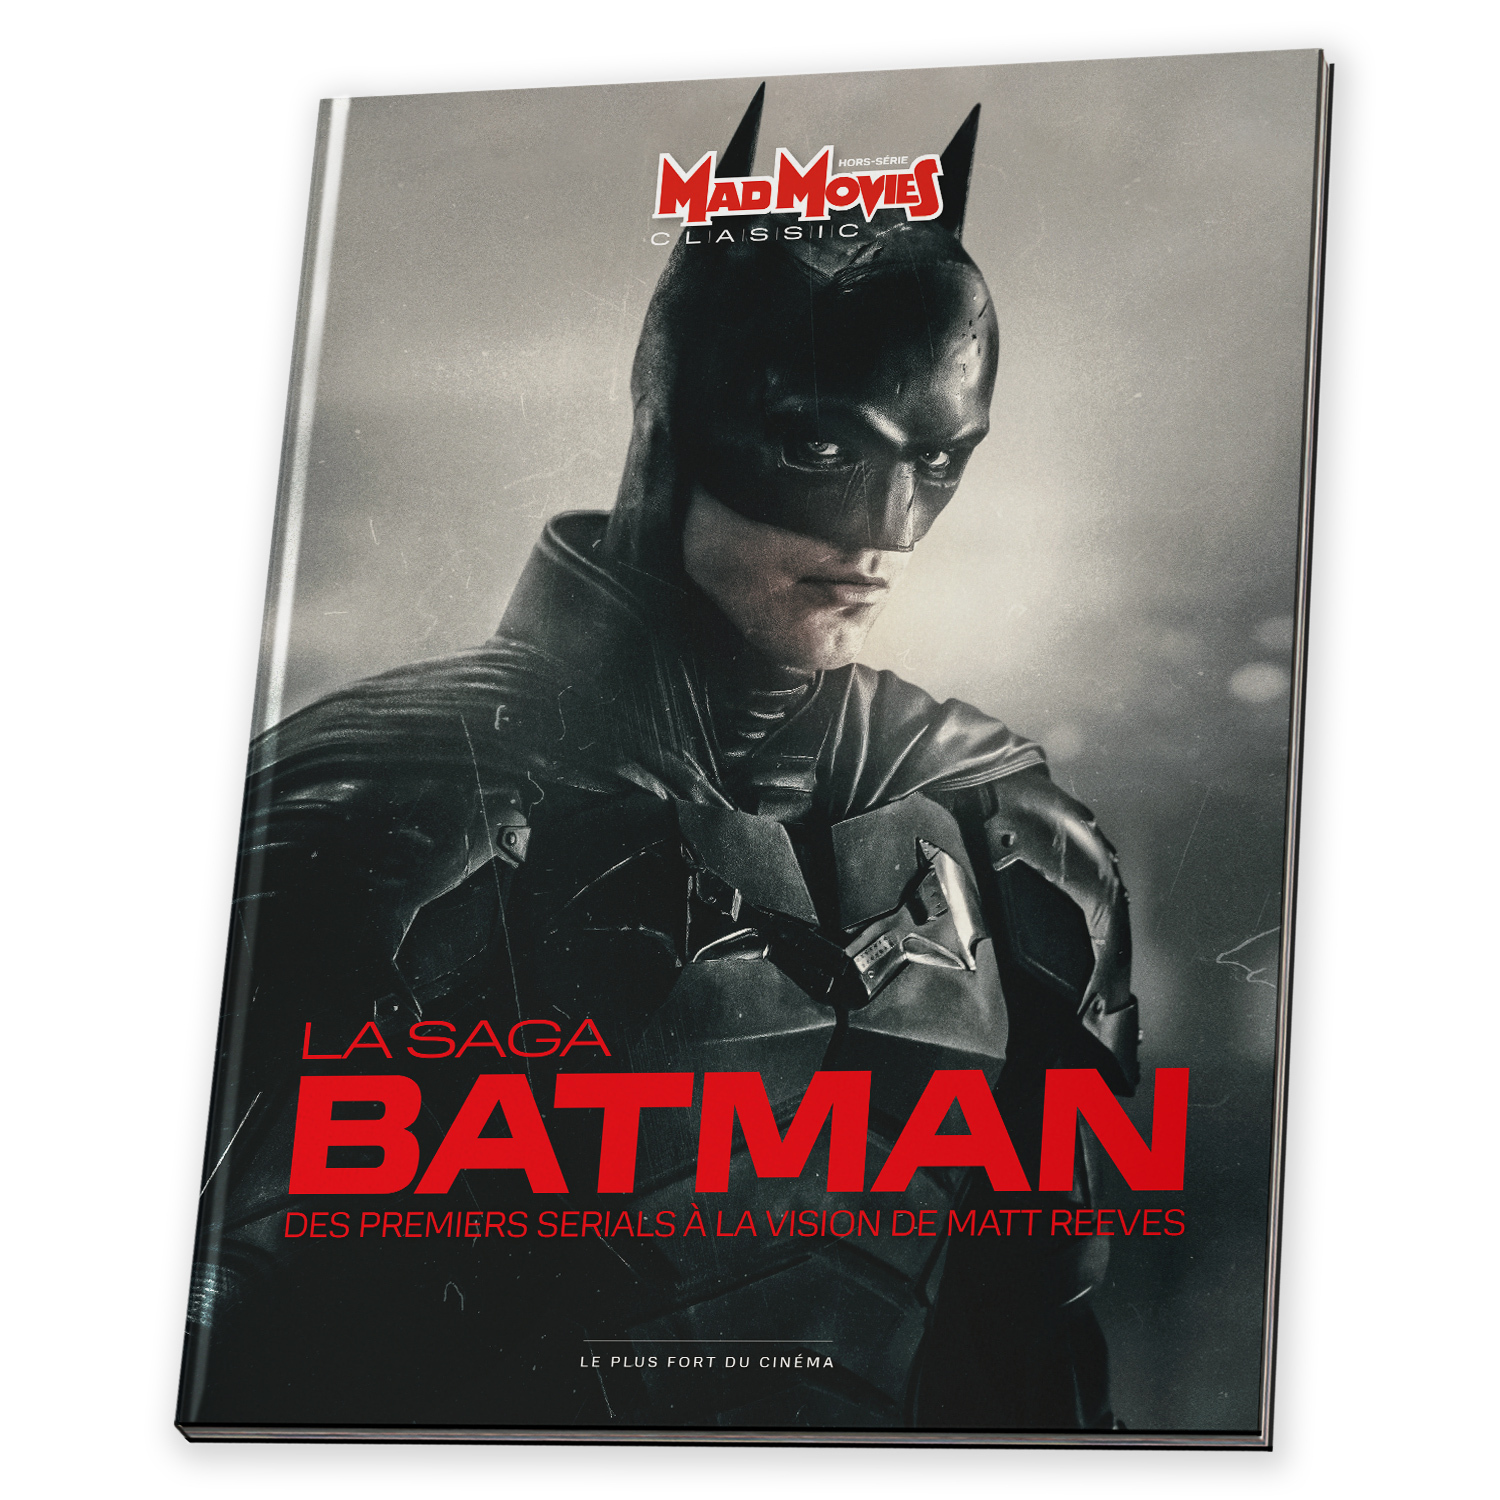 La saga Batman par MadMovies par Custom Publishing France — KissKissBankBank